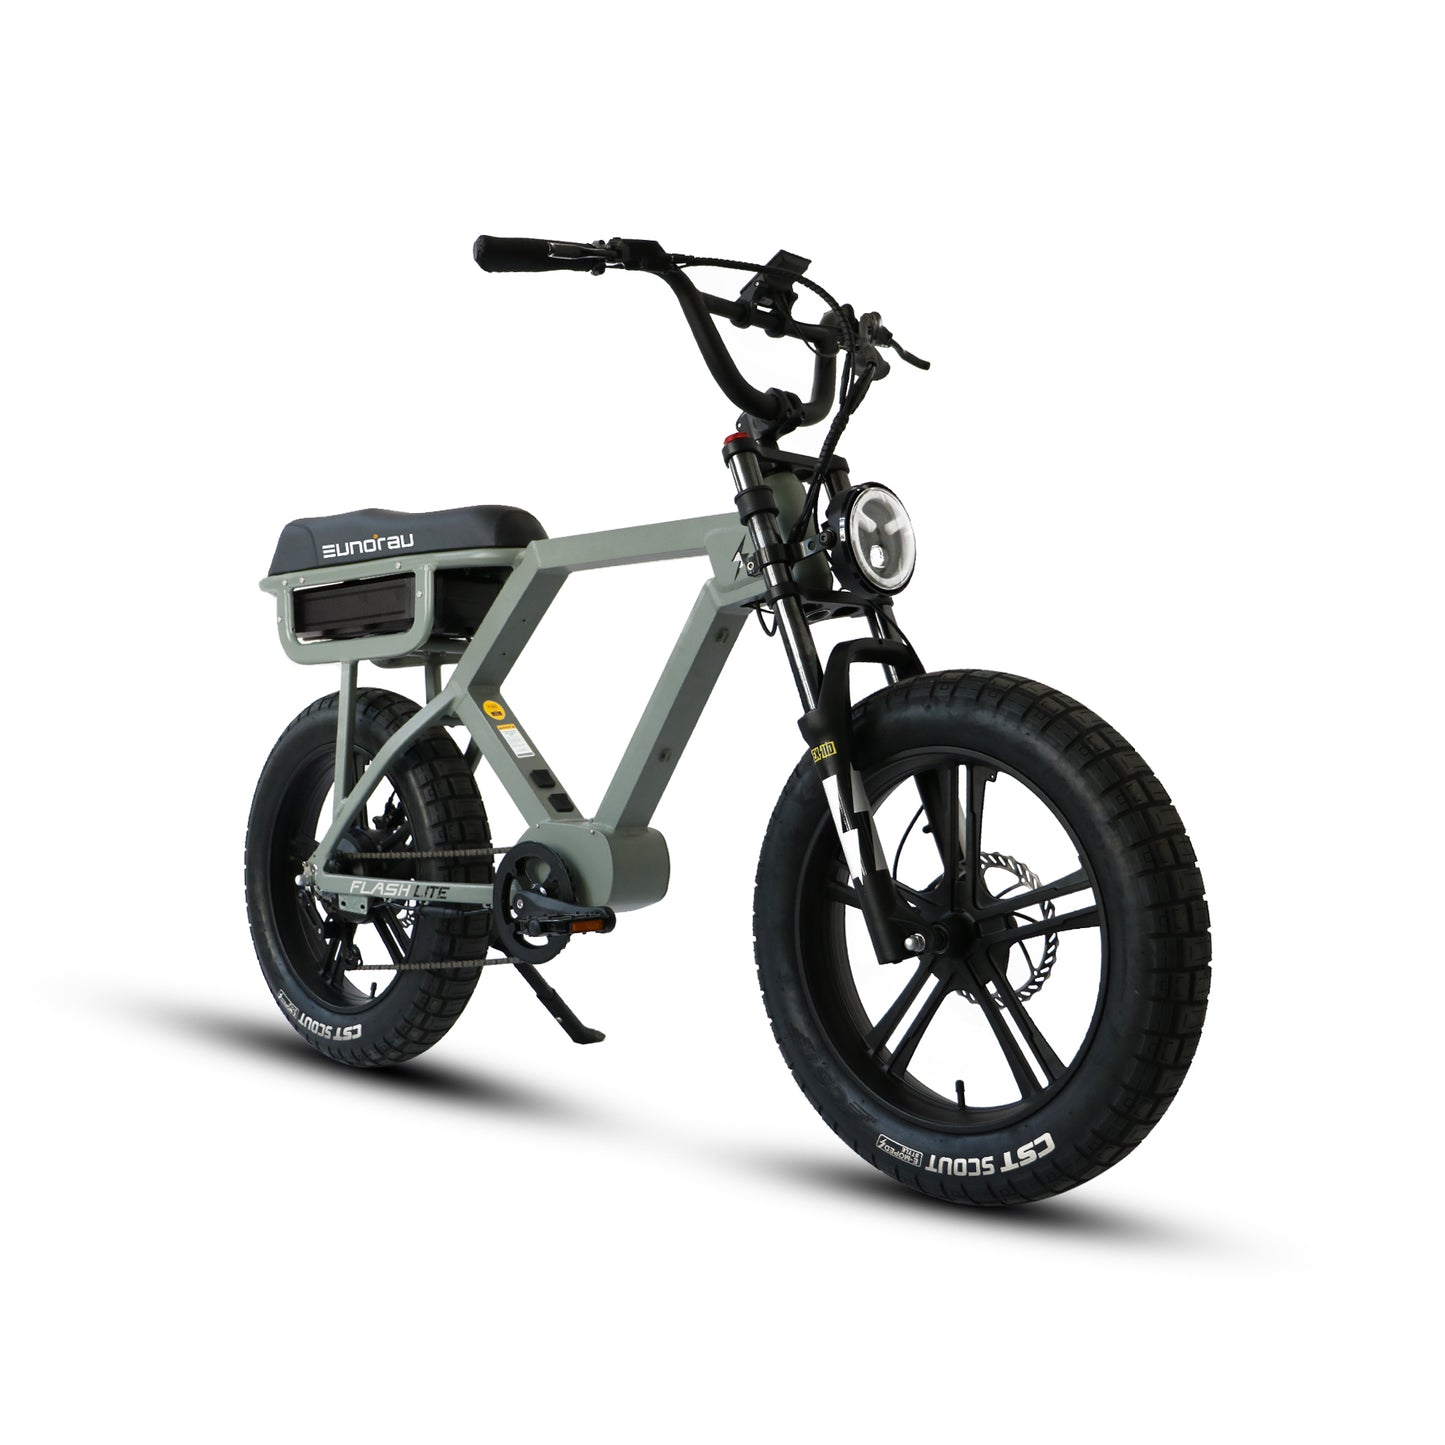 Eunorau Flash Electric Bike [Lunar Dust/Moon Black]